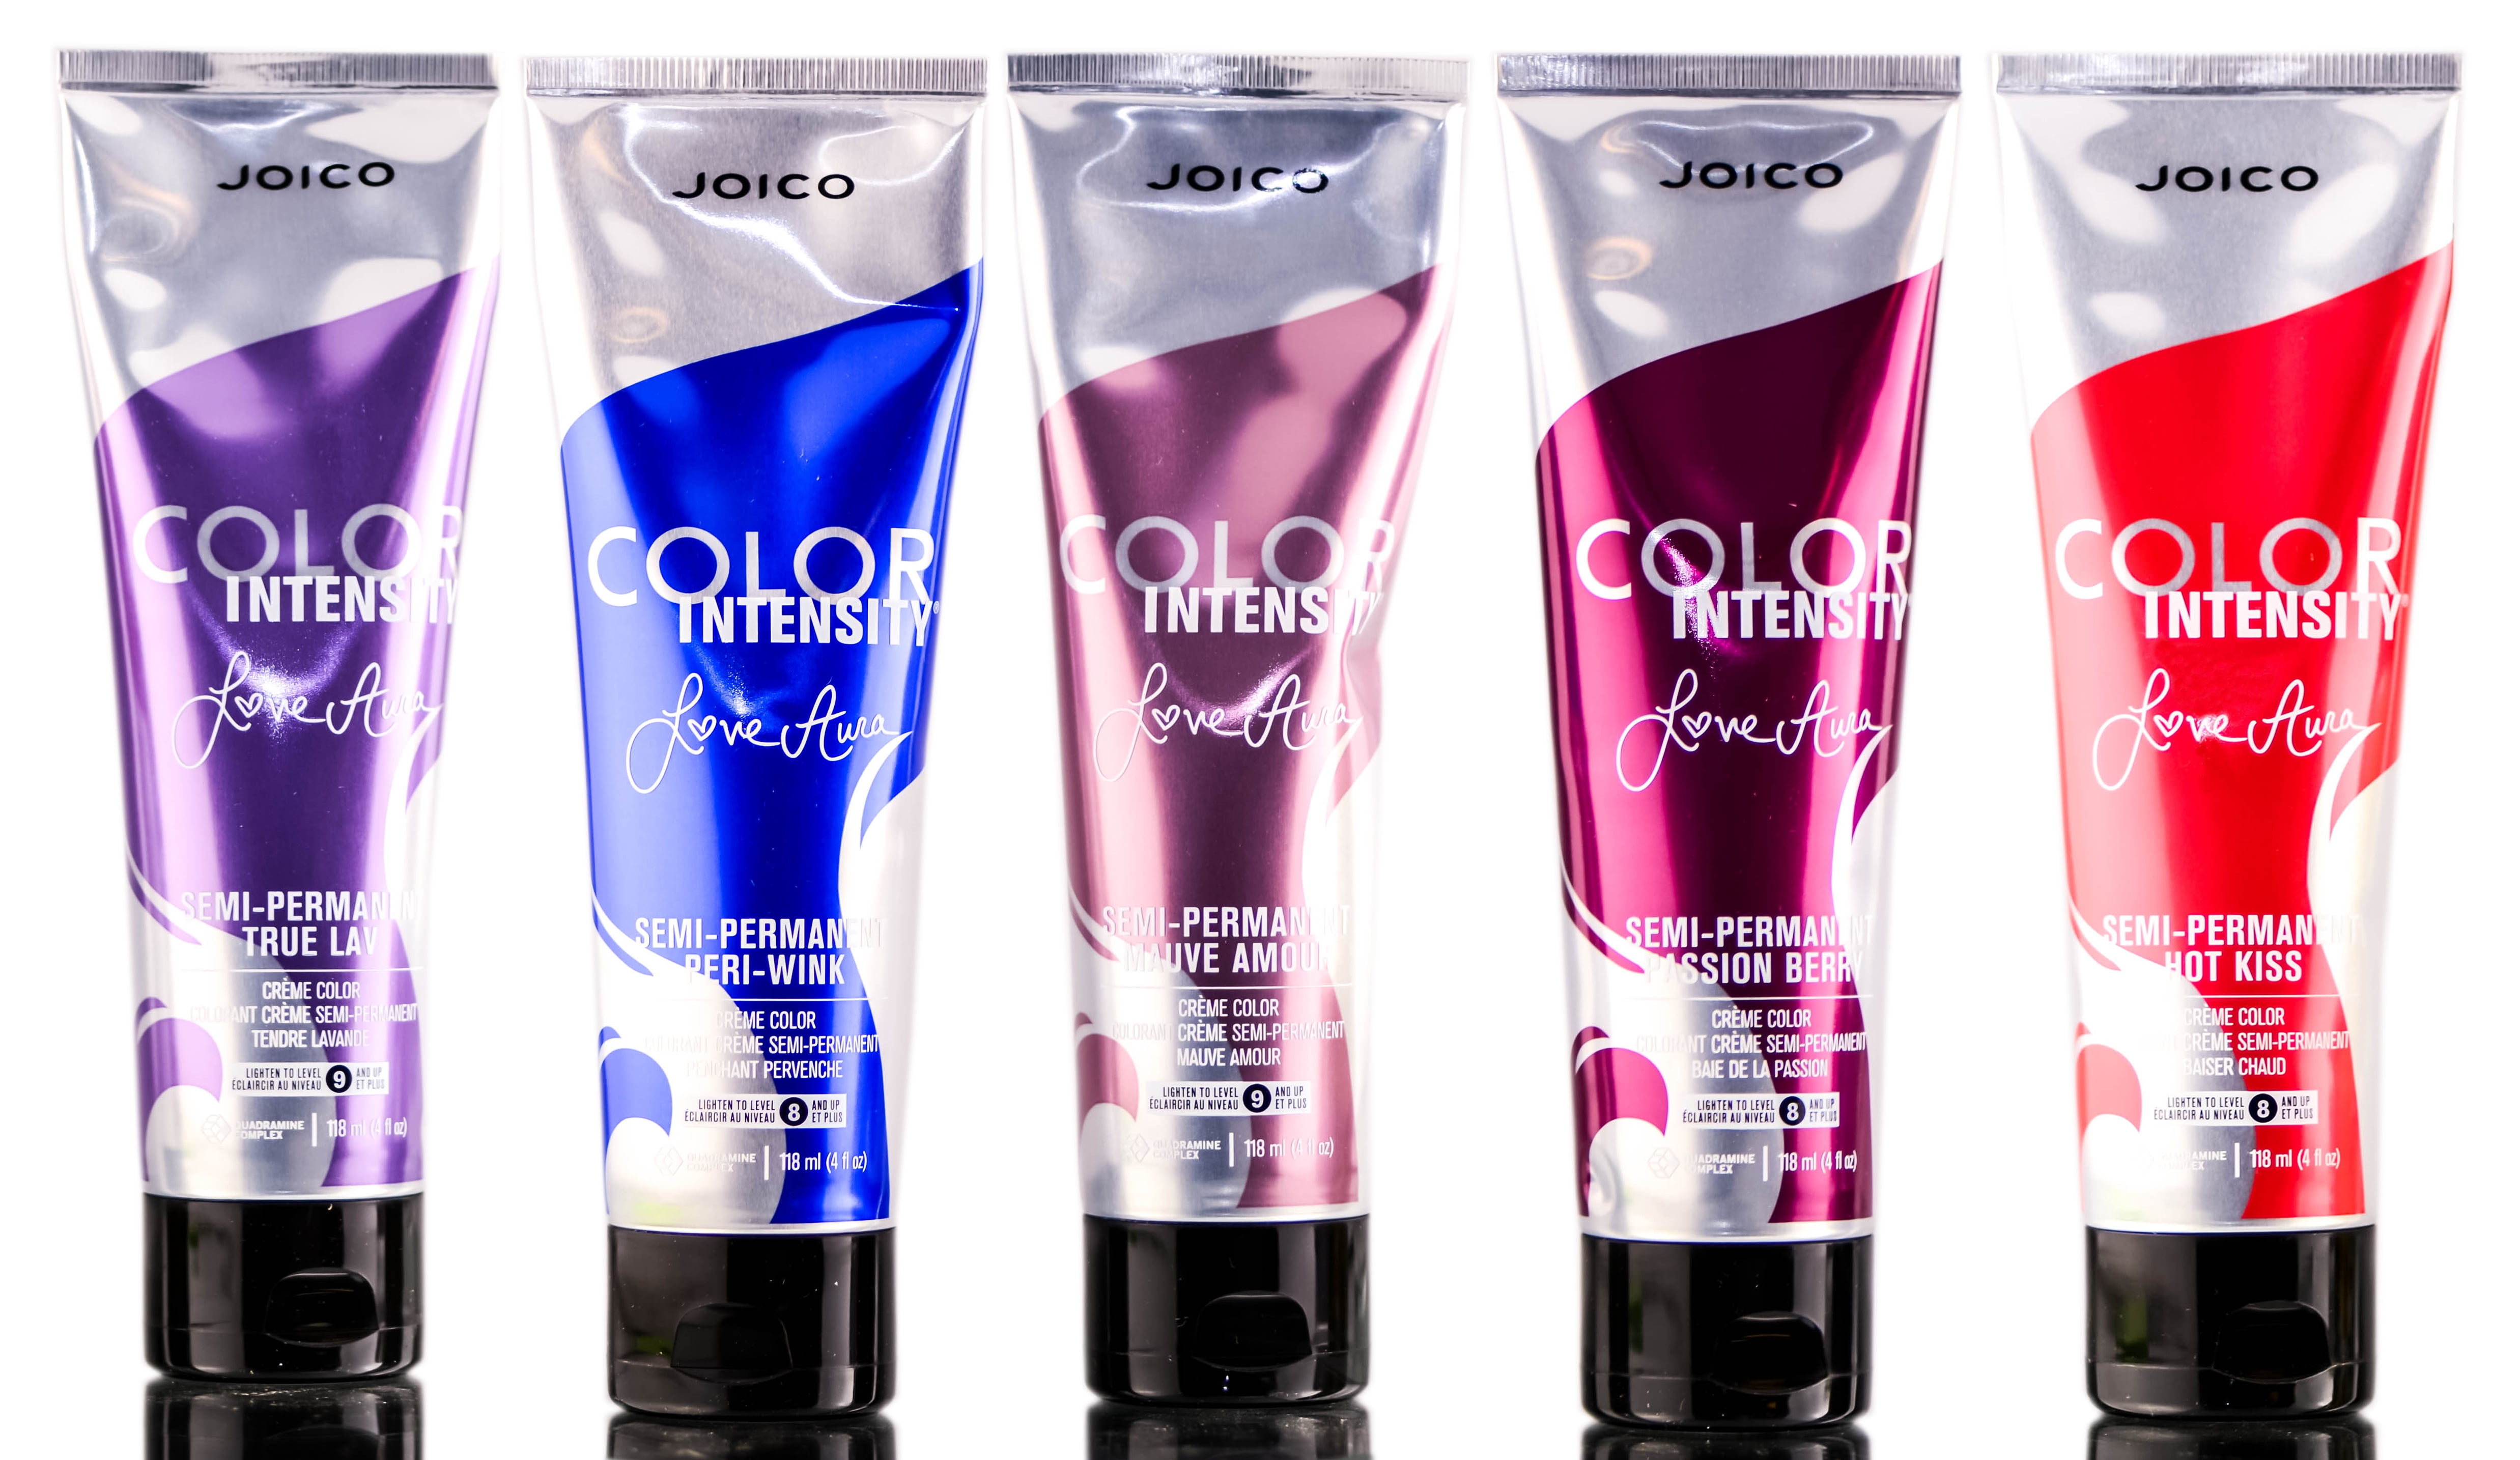 Joico Intensity Semi-Permanent Hair Color - Cobalt Blue - wide 1